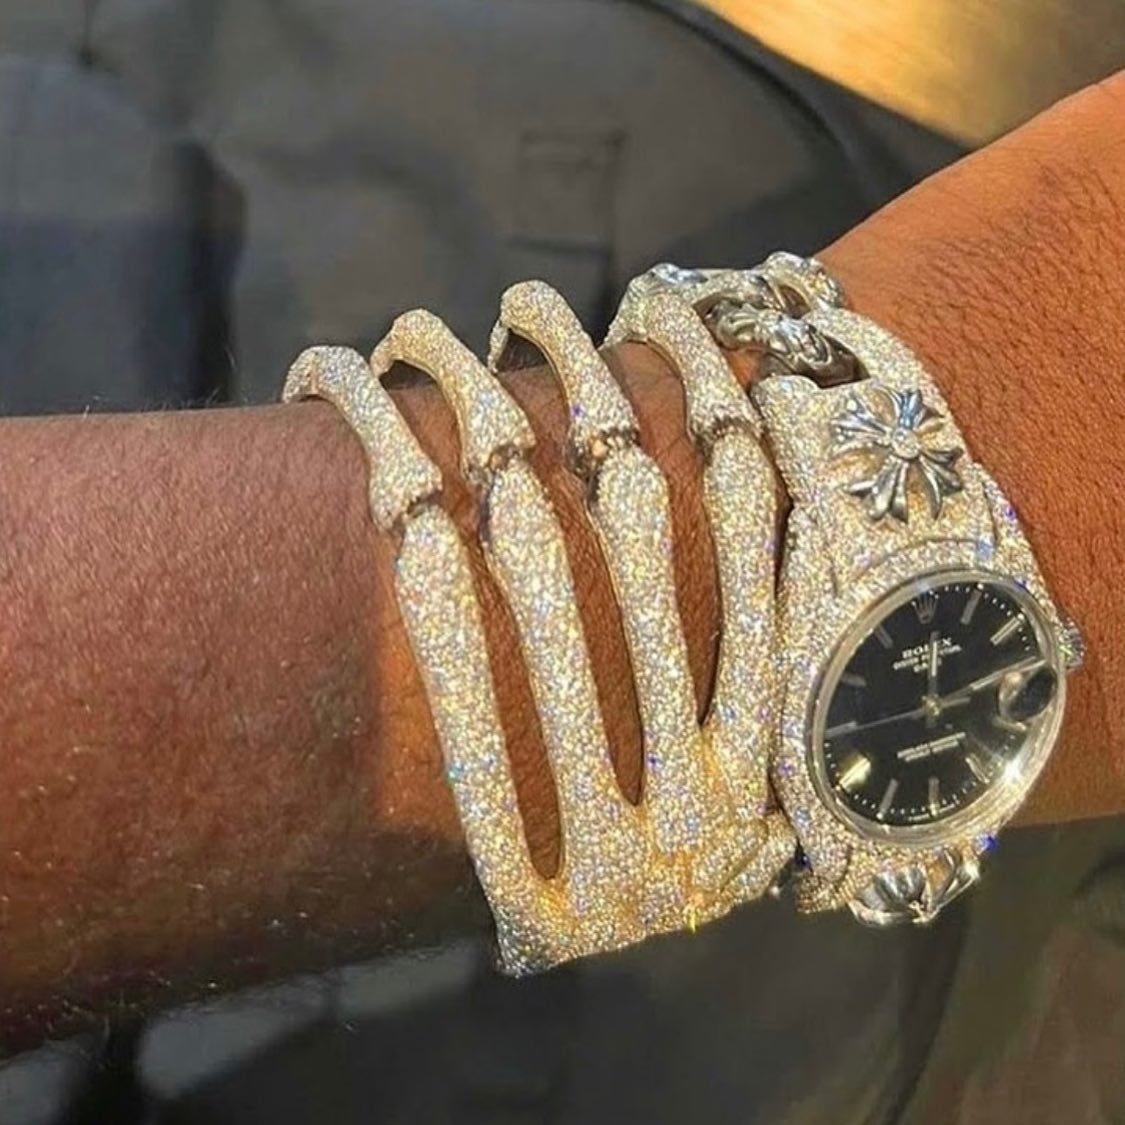 Stien Taknemmelig sø Ovrnundr on Twitter: "Ken Carson purchases an iced out Chrome Hearts x Rolex  watch https://t.co/Rvd5H9RcQX" / Twitter